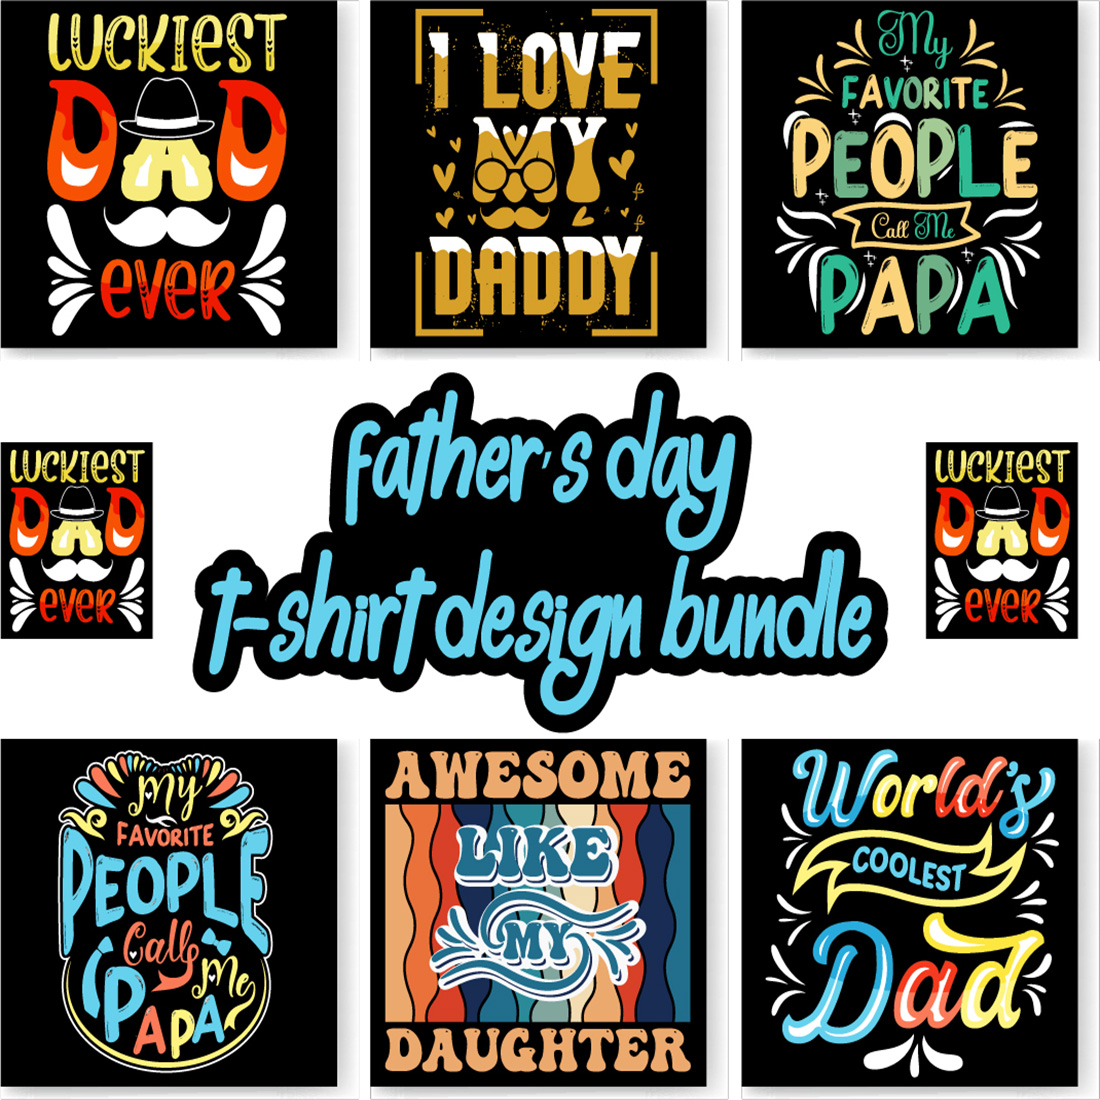 Father's day t-shirt design bundle, Dad t-shirt design, papa t shirt preview image.